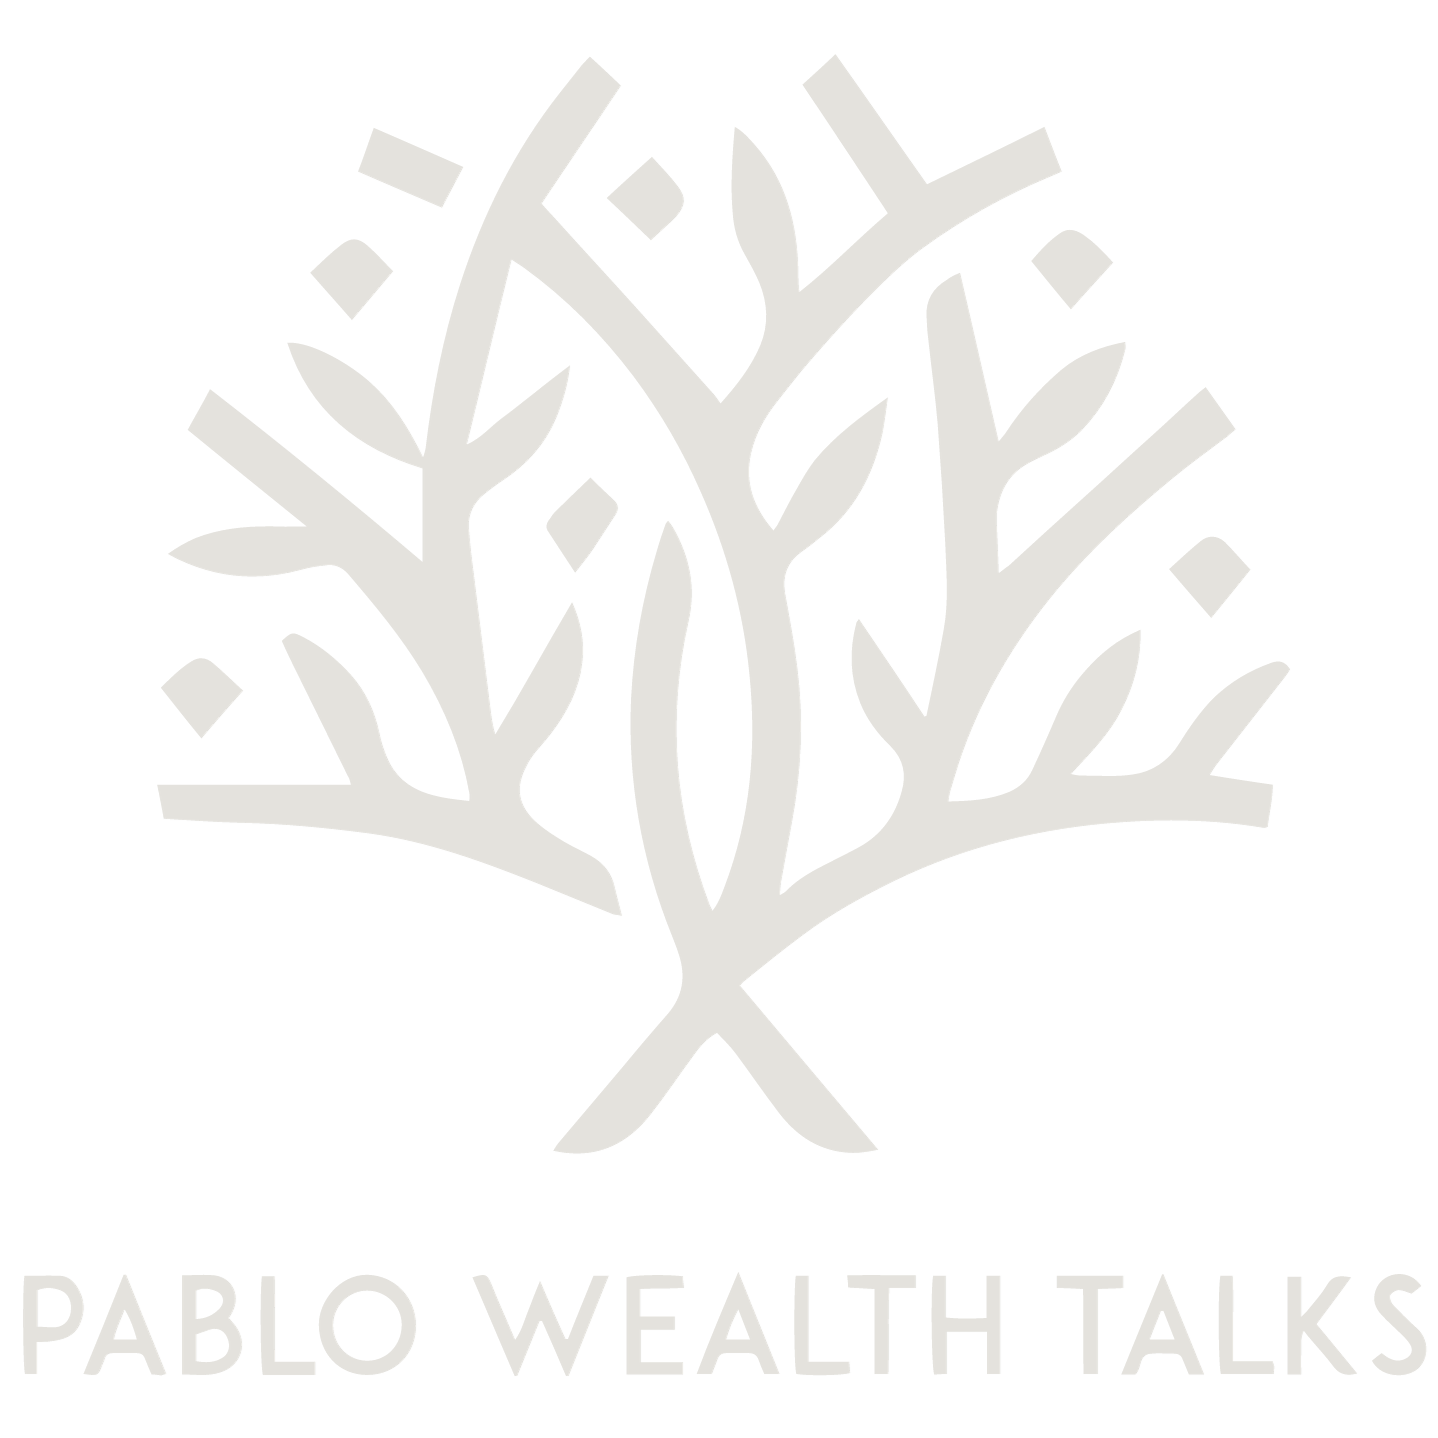 PABLO WEALTH TALKS